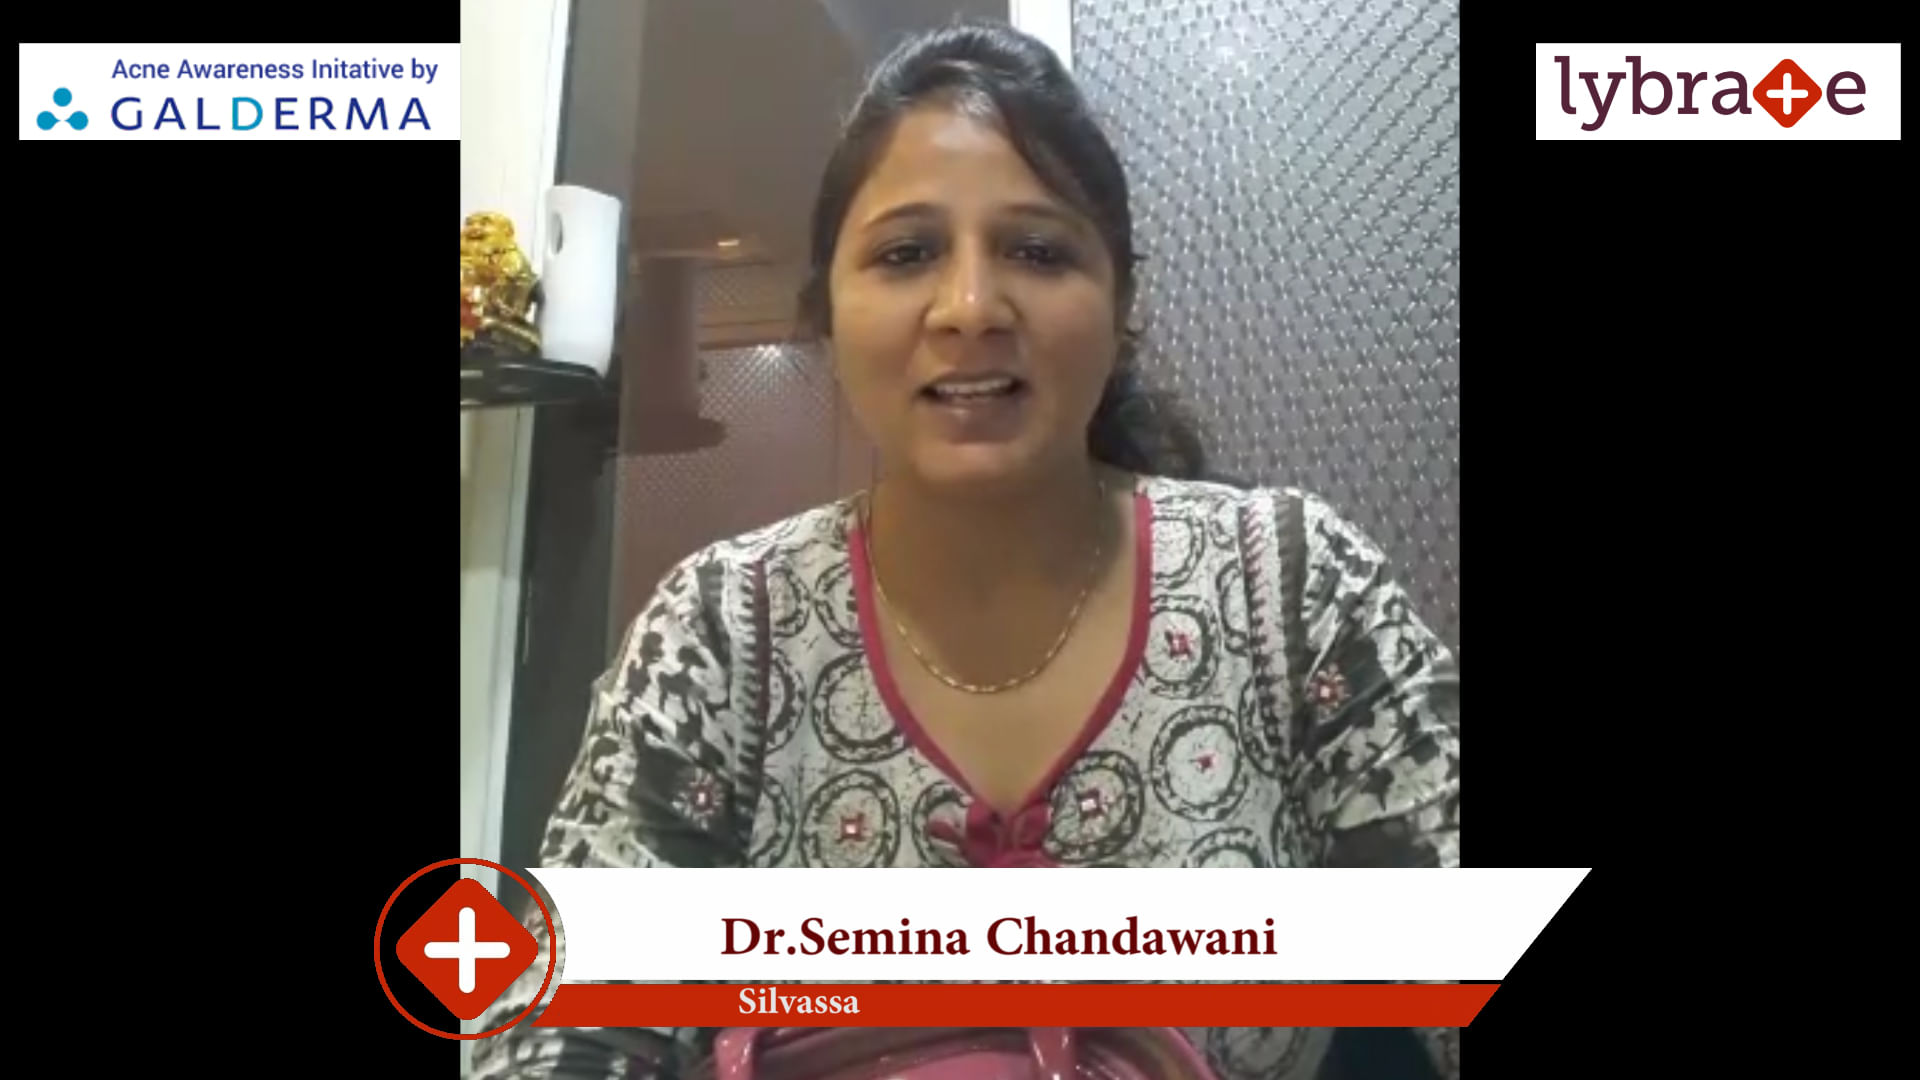 Lybrate | Dr. Semina Chandawani speaks on IMPORTANCE OF TREATING ACNE EARLY